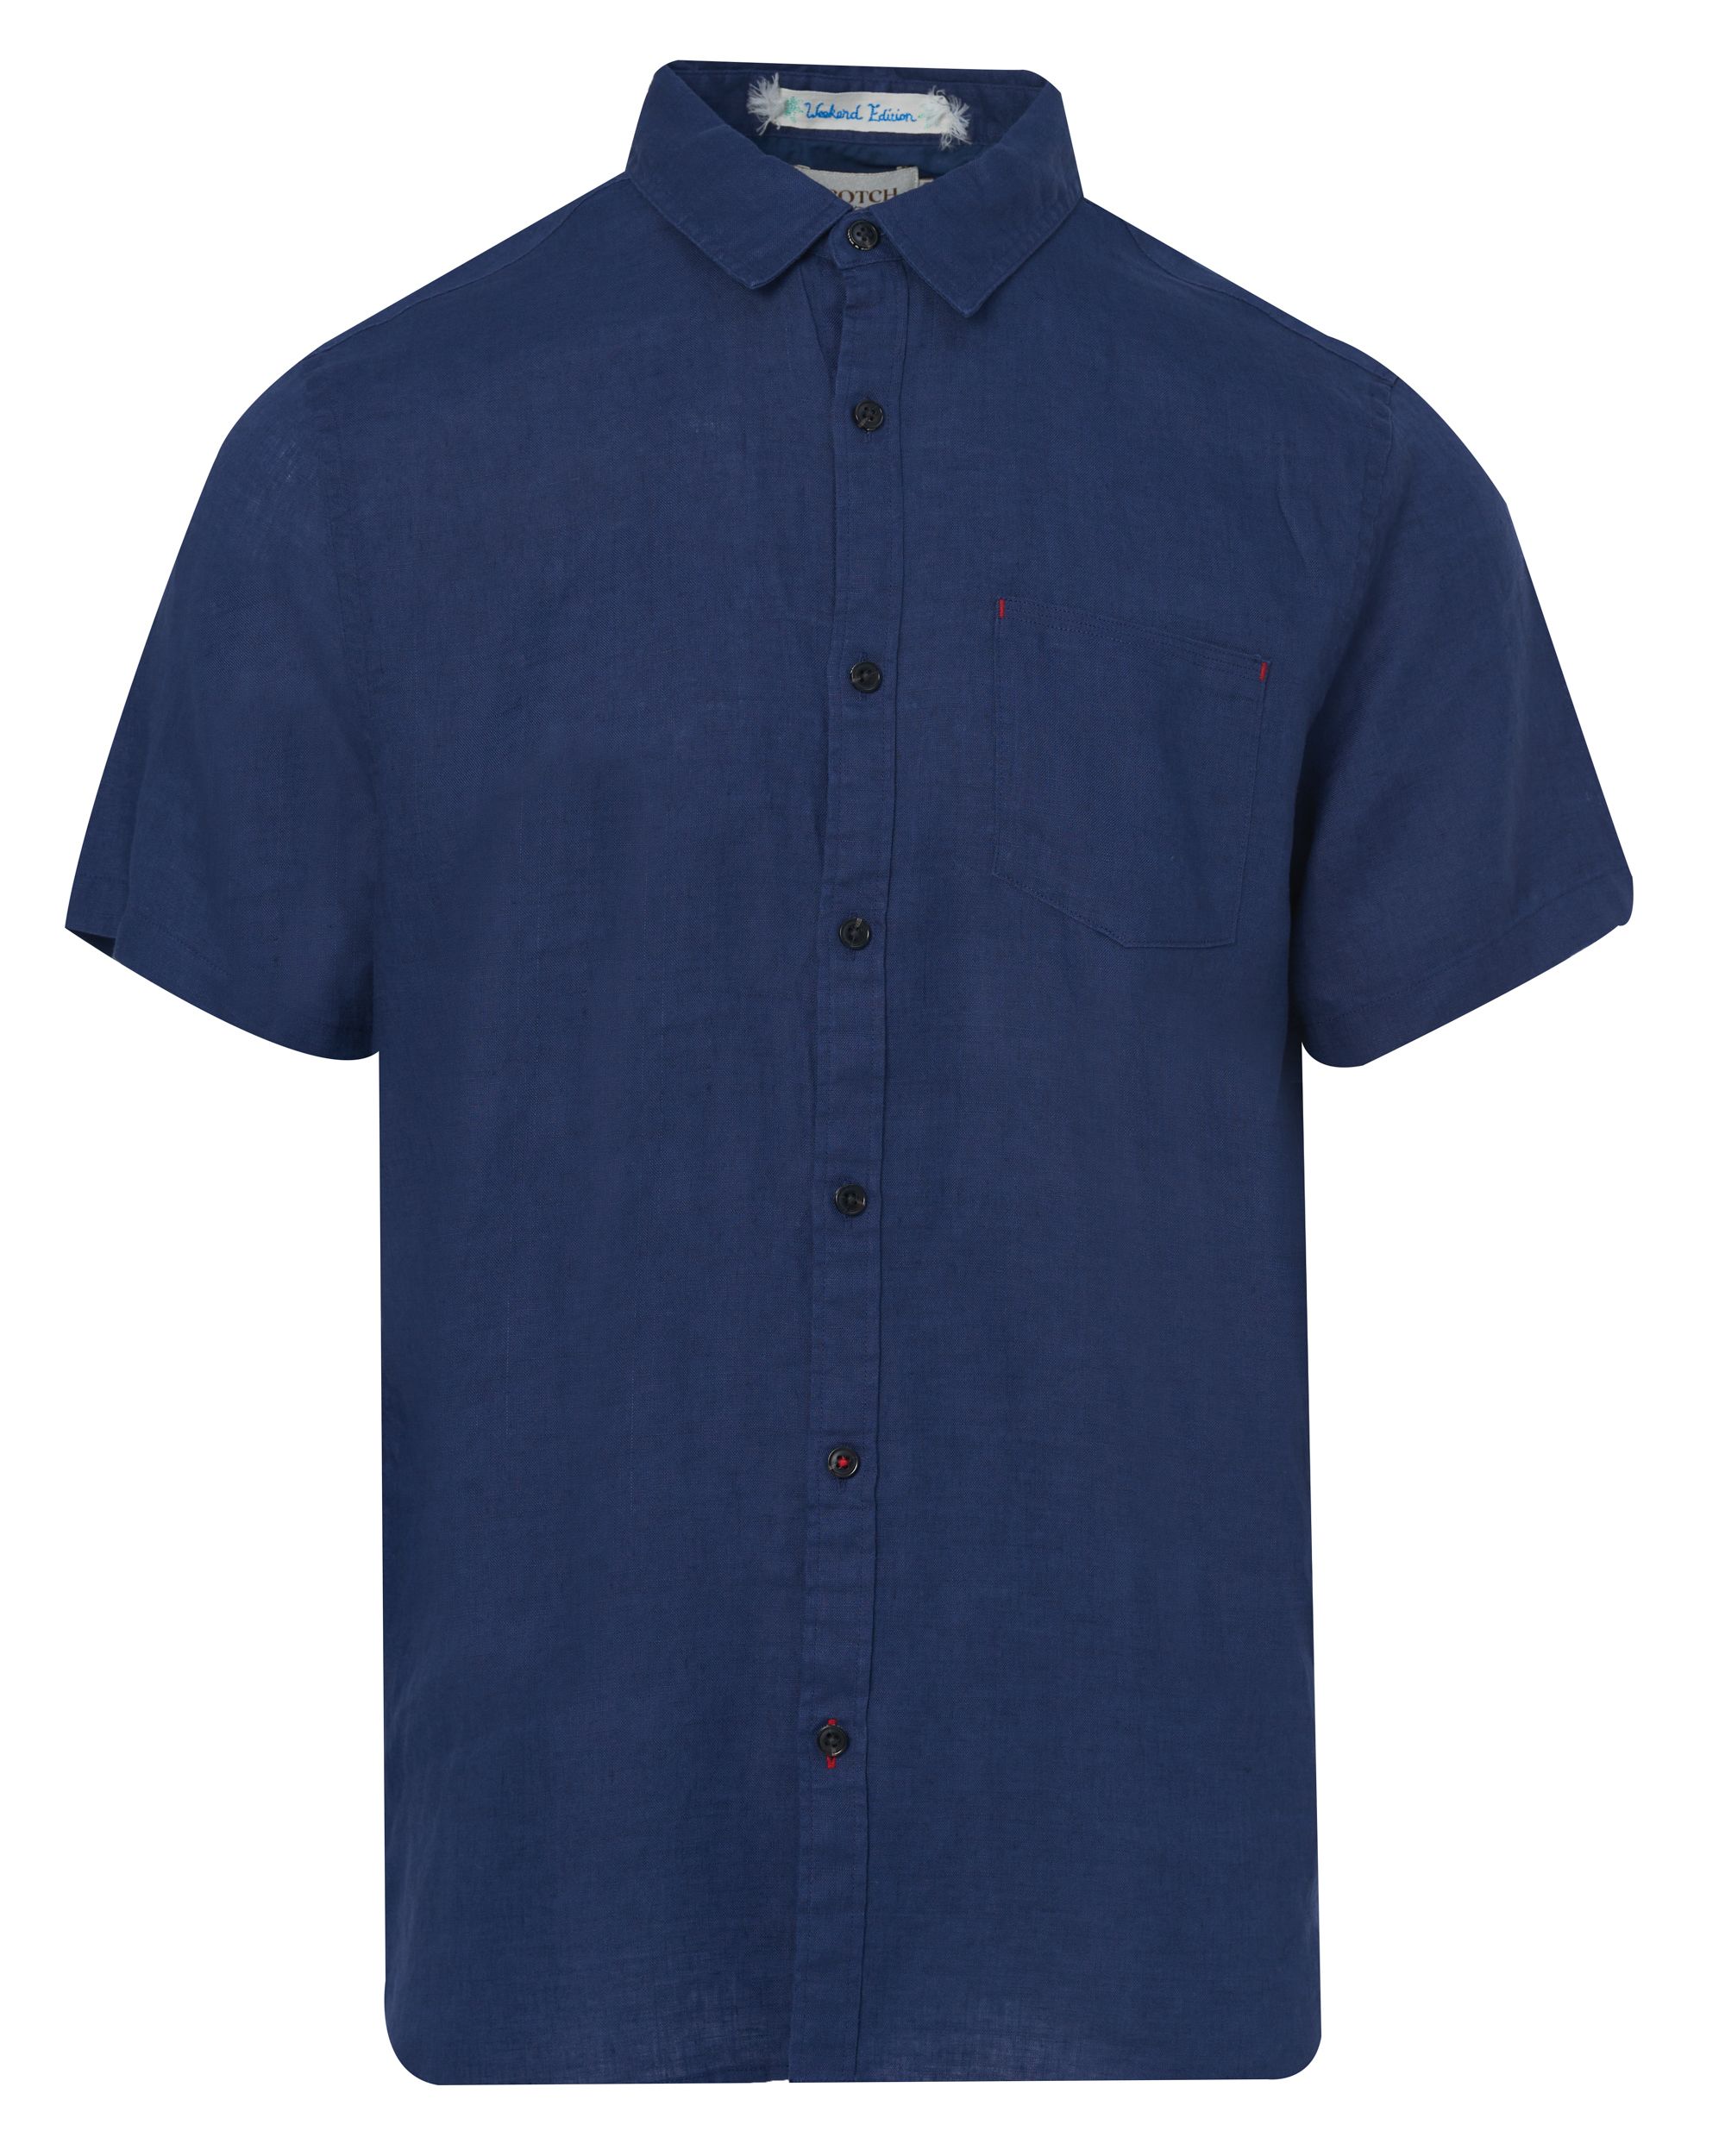 Scotch & Soda Casual Overhemd KM Donker blauw 086168-001-L